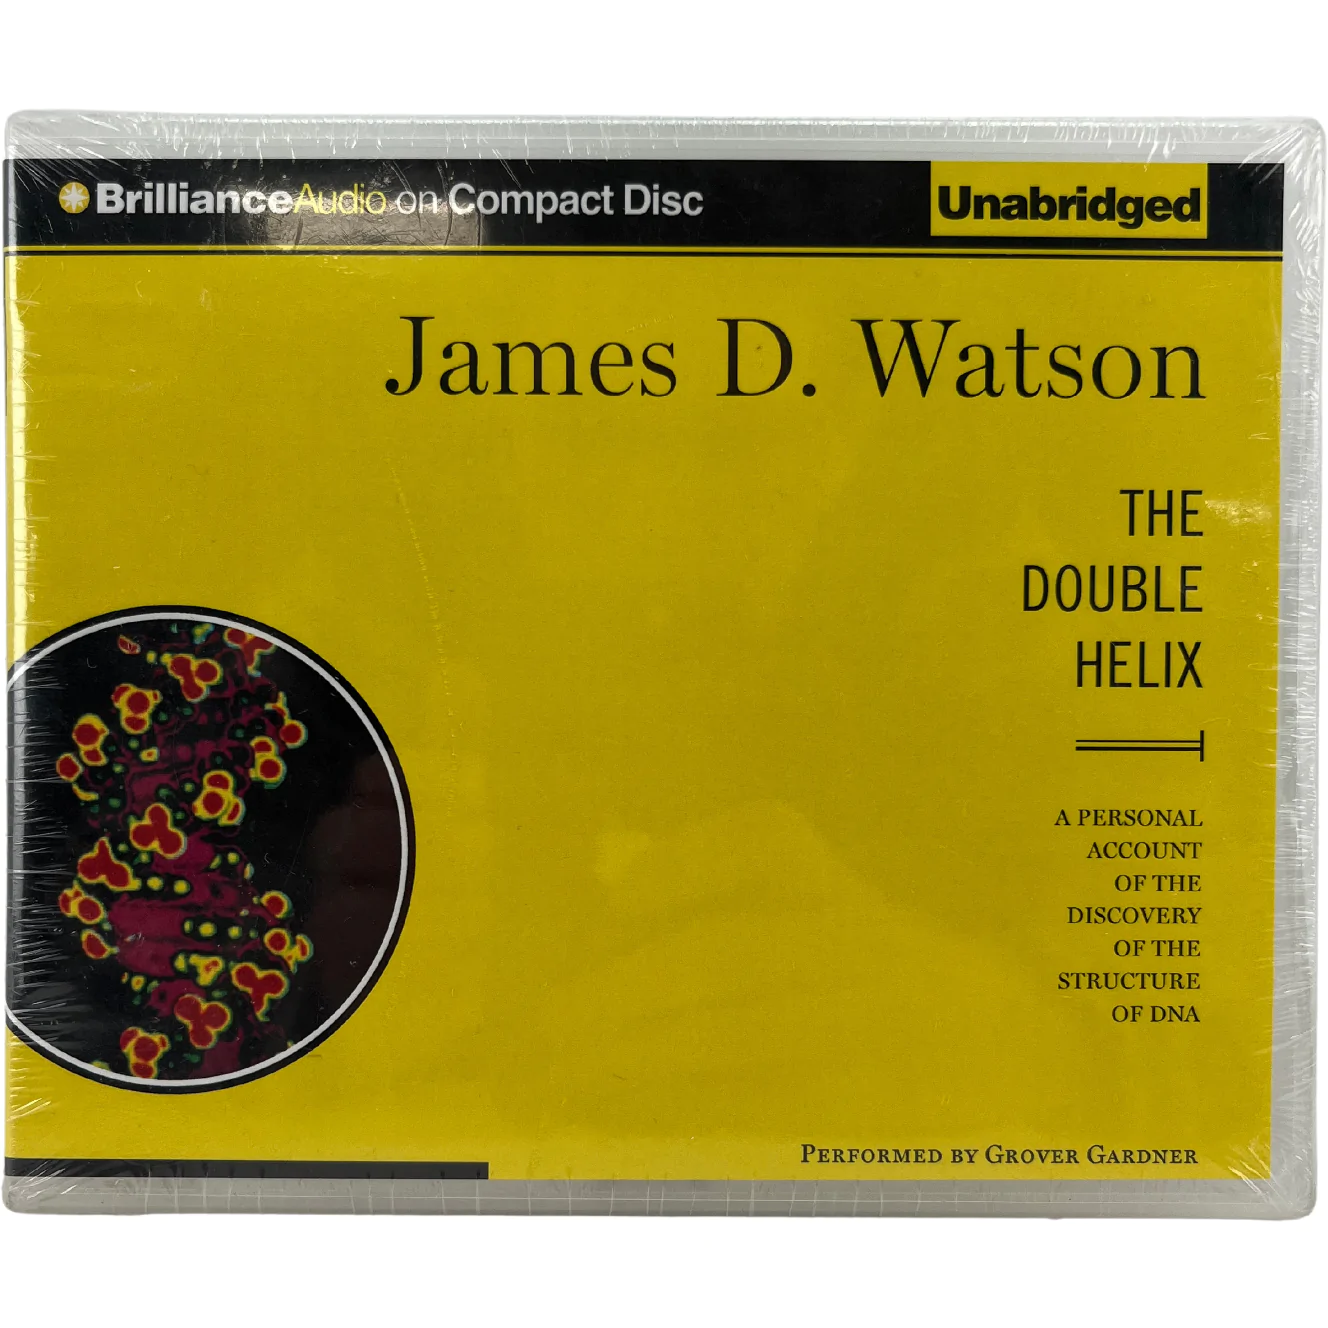 Audiobook "The Double Helix" / Author James D Watson / CD